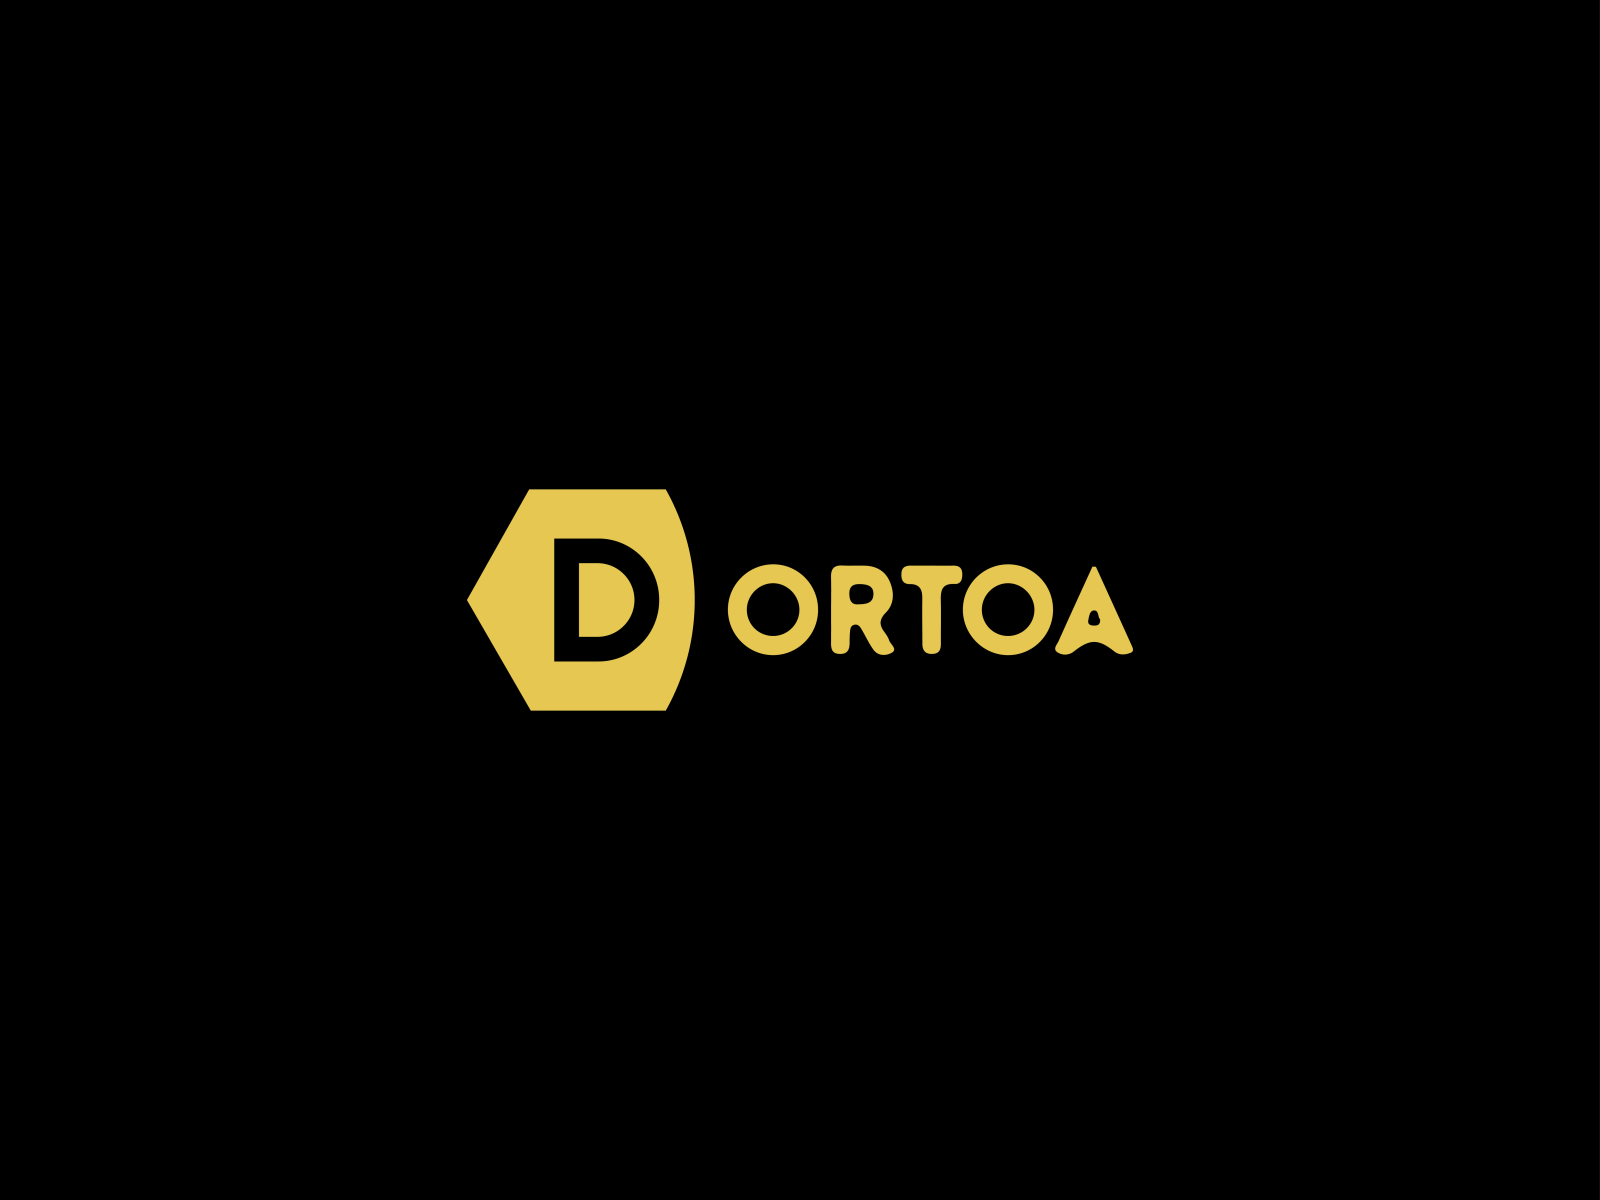 Company logo design II Dorota by Jaber - Logo Designer on Dribbble